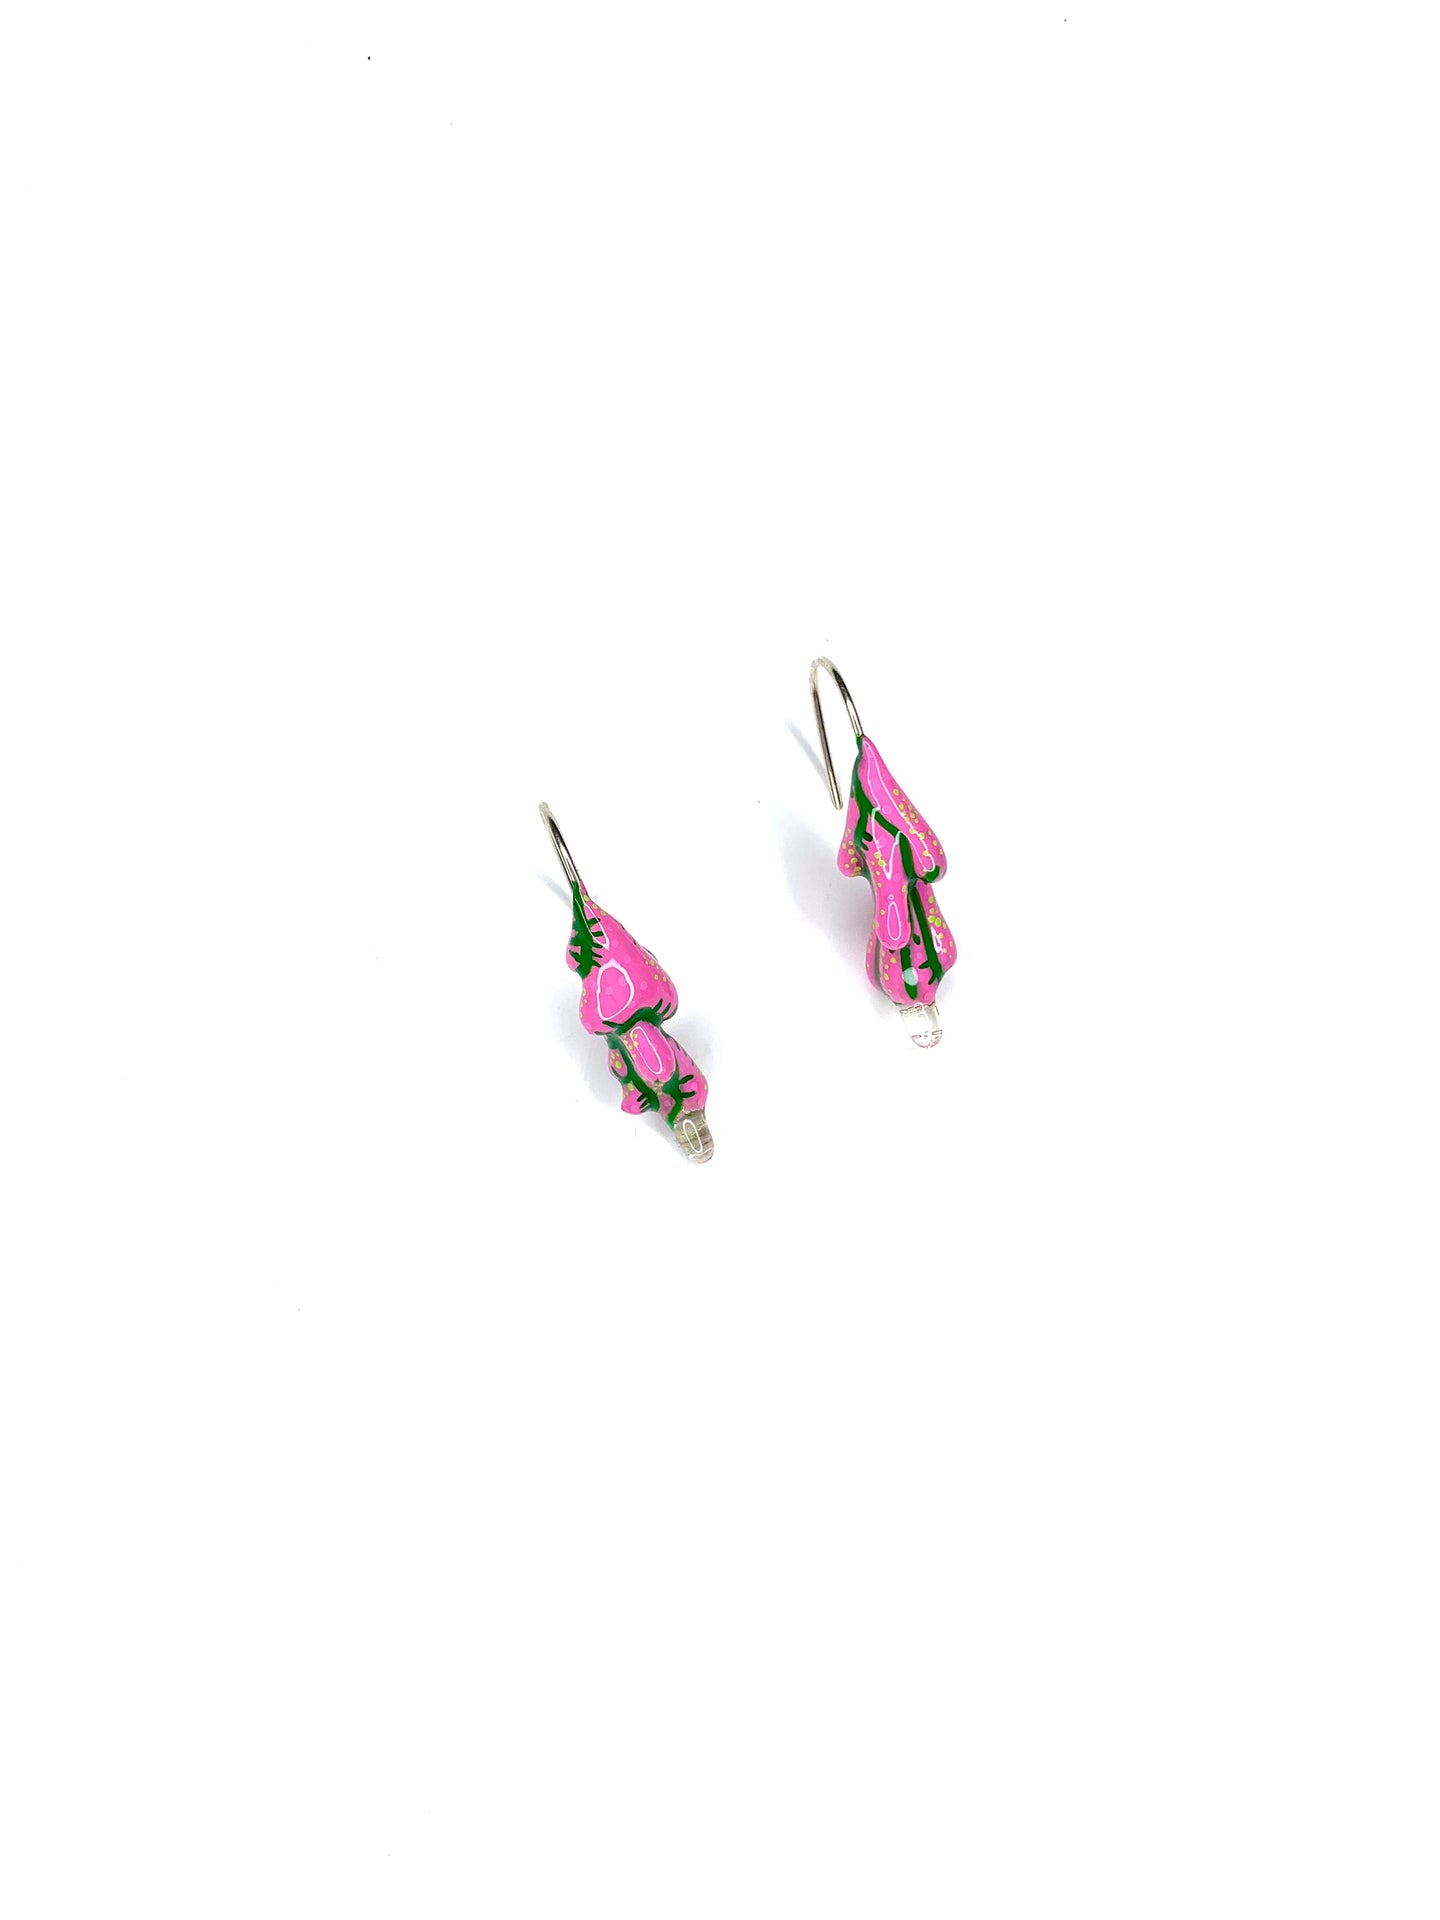 HABITAT Earrings Illusions Pink Green